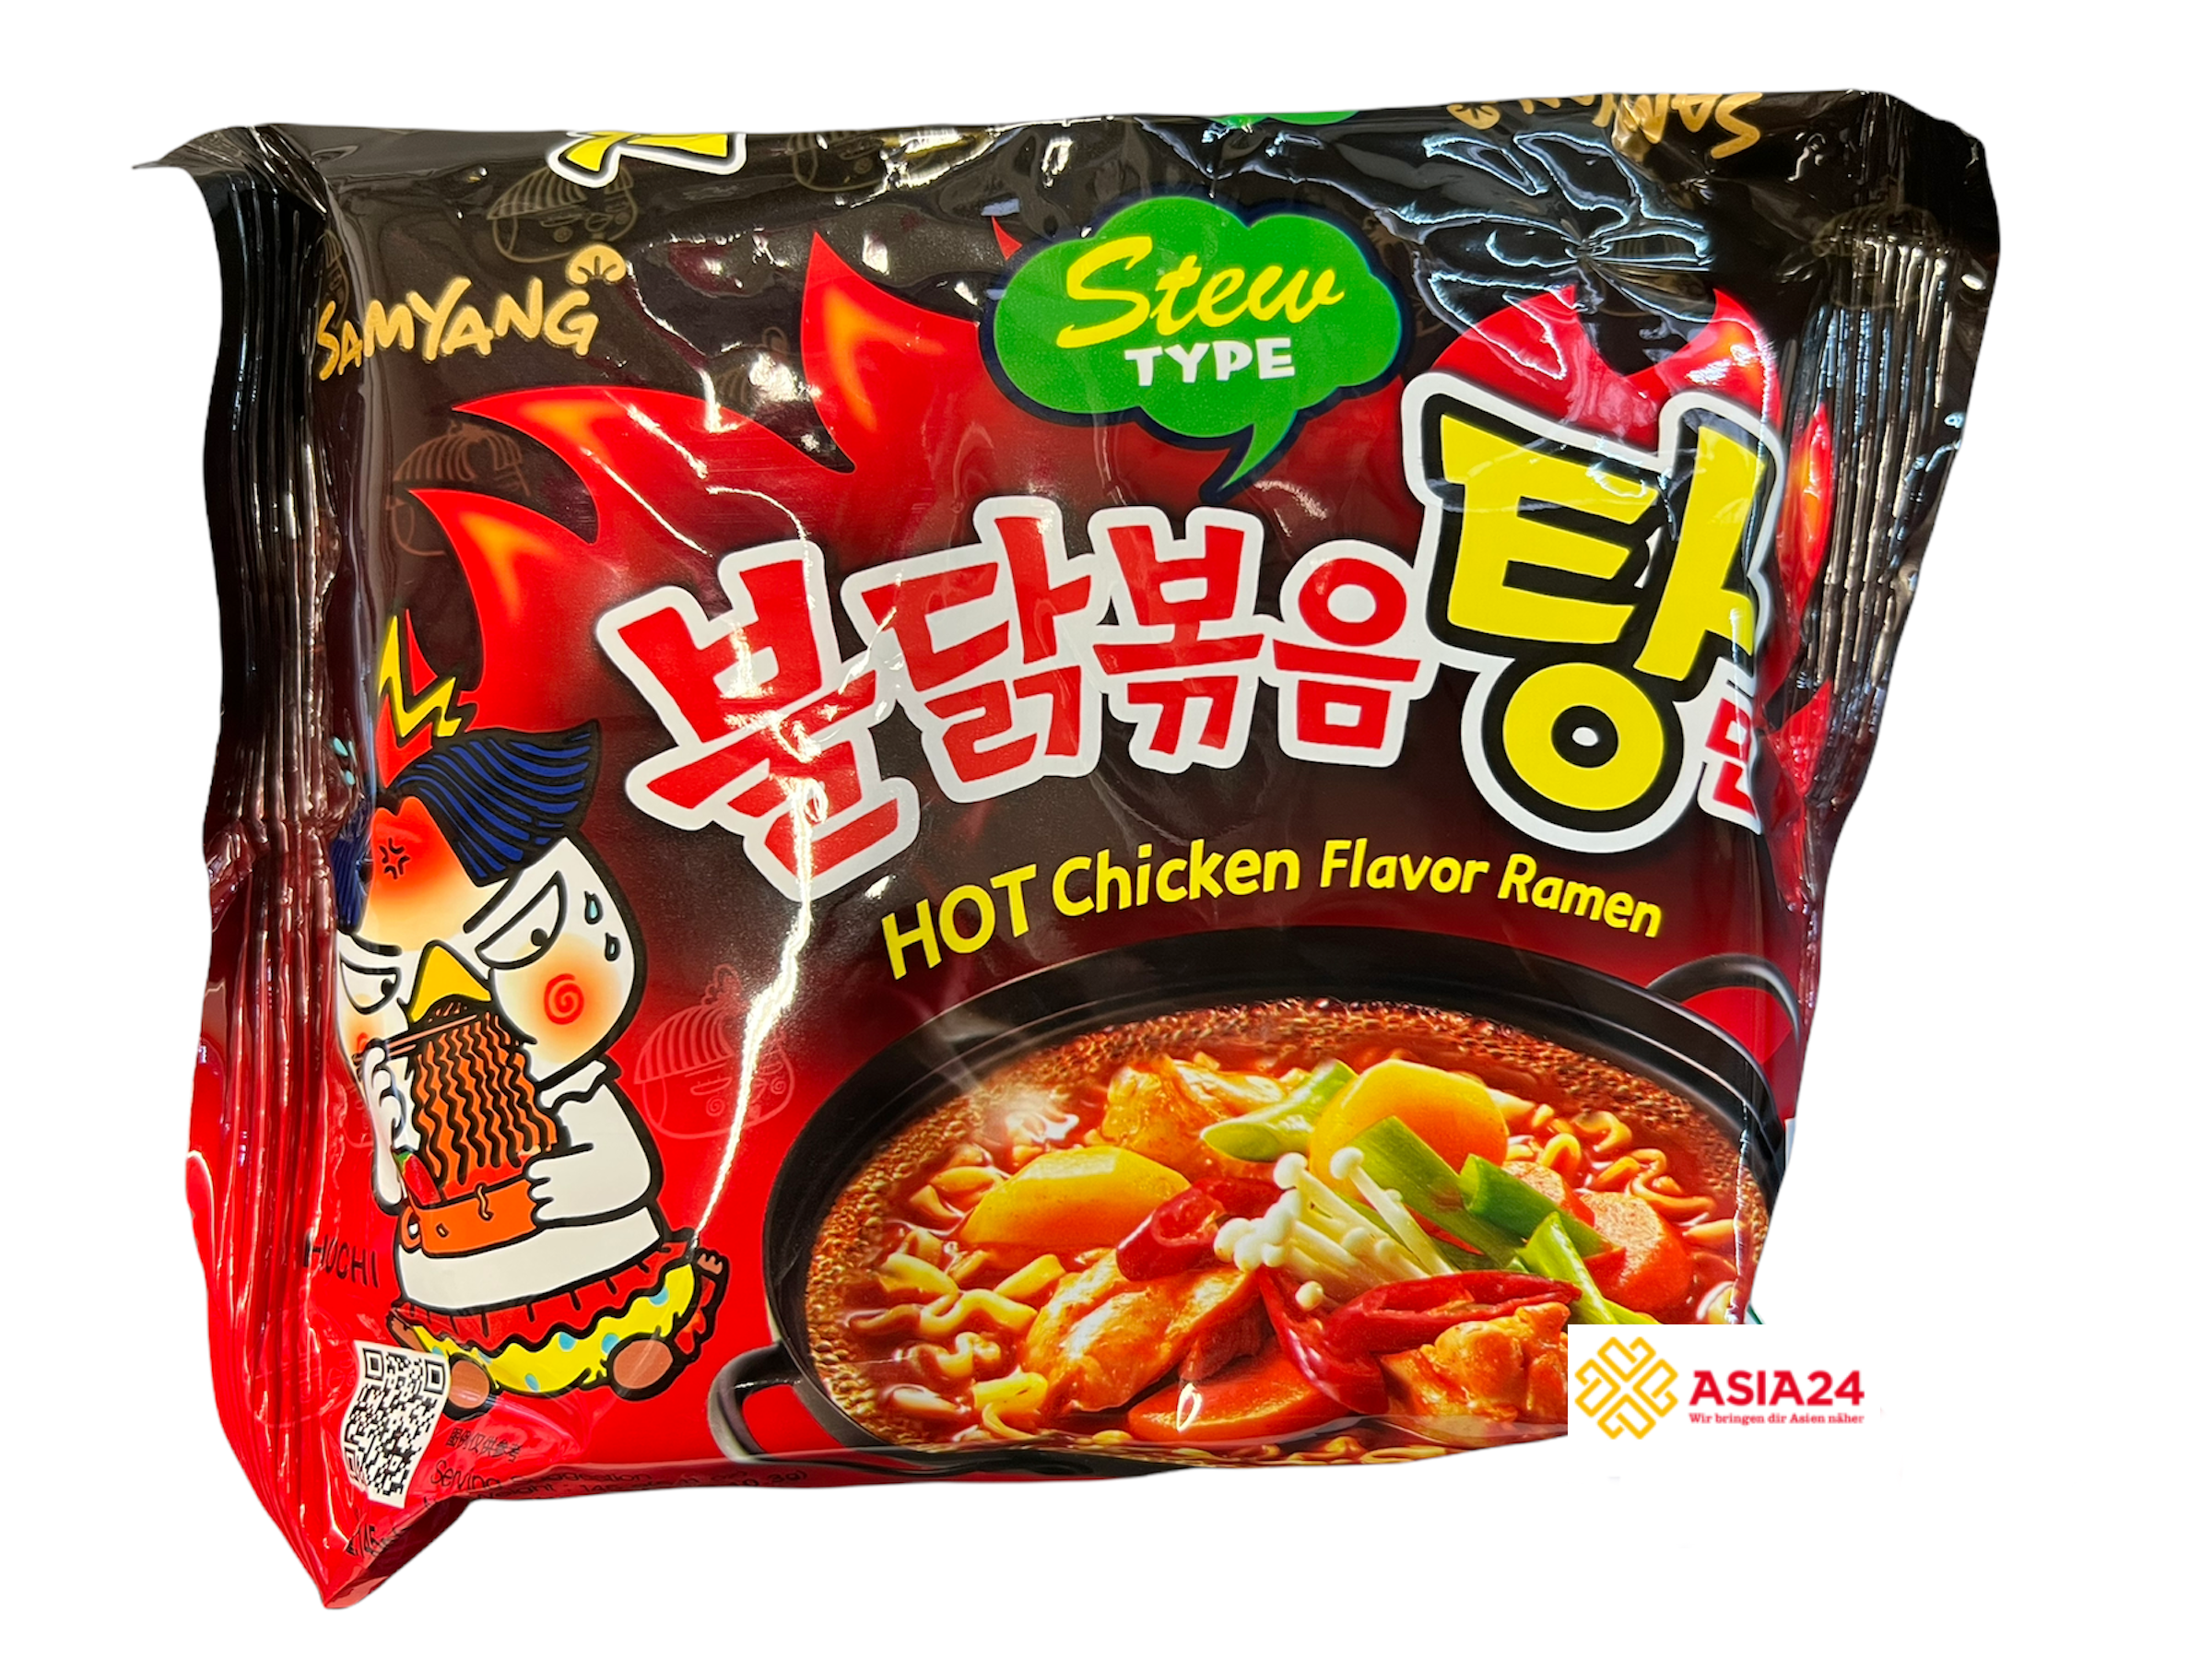 Hot Chicken Flavor Ramen Samyang Stew Type145g- Mì cay Hàn Quốc Samyang STEW TYPE huong vi Lau thai 145g